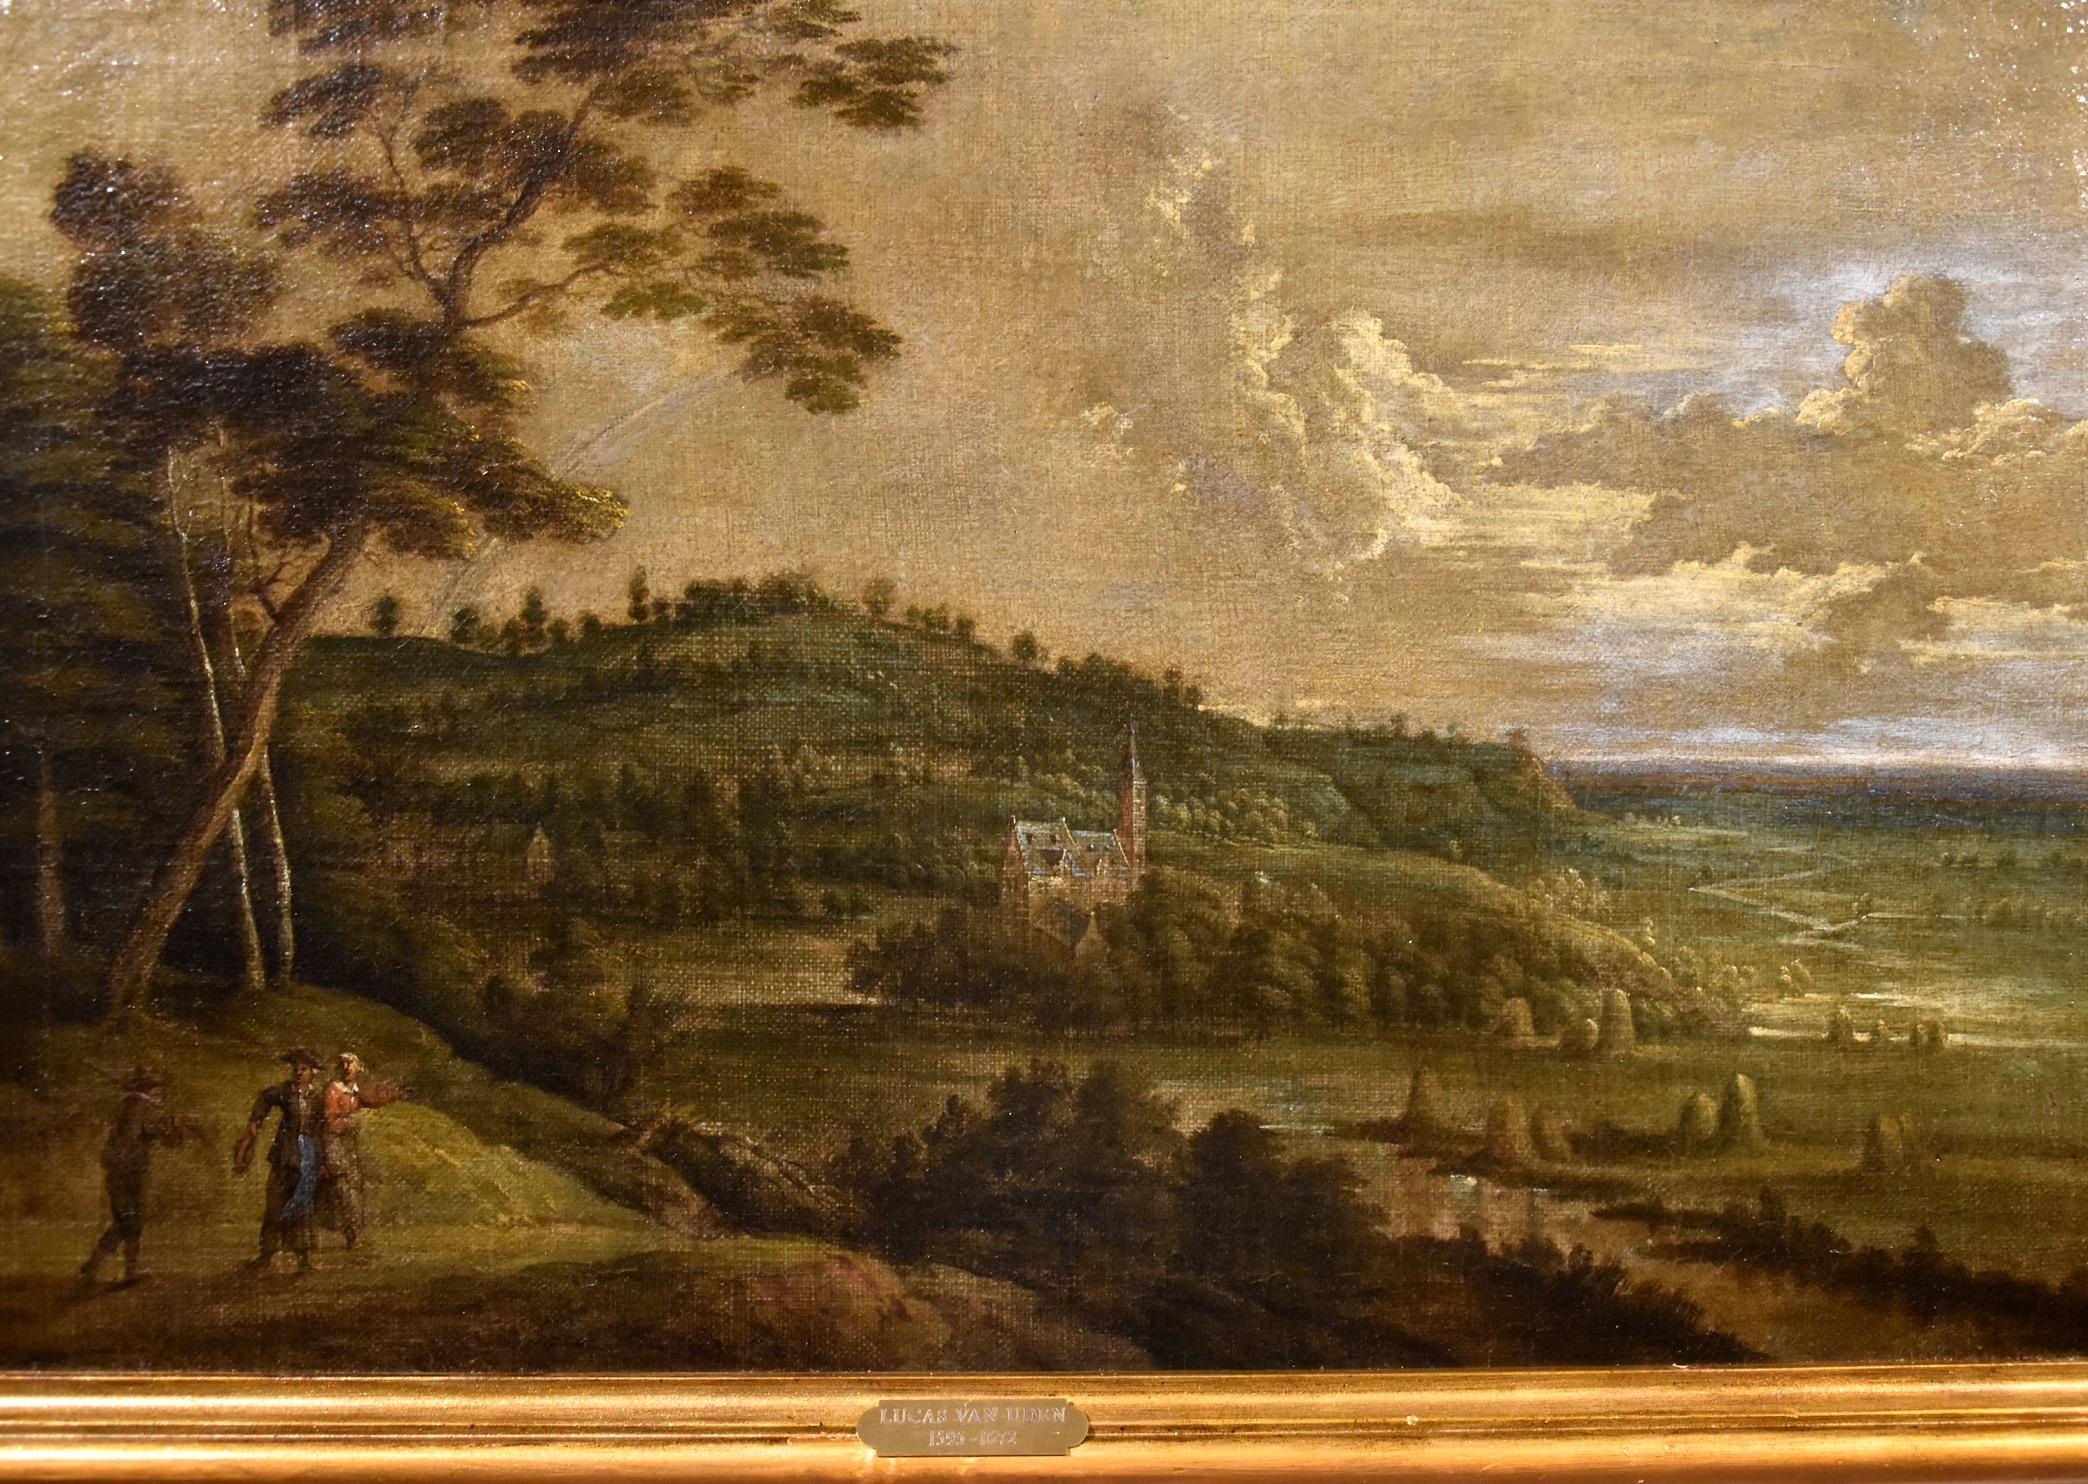 Van Uden Landscapes Paint Oil on canvas Old master 17th Century Flemish Wood Art 2